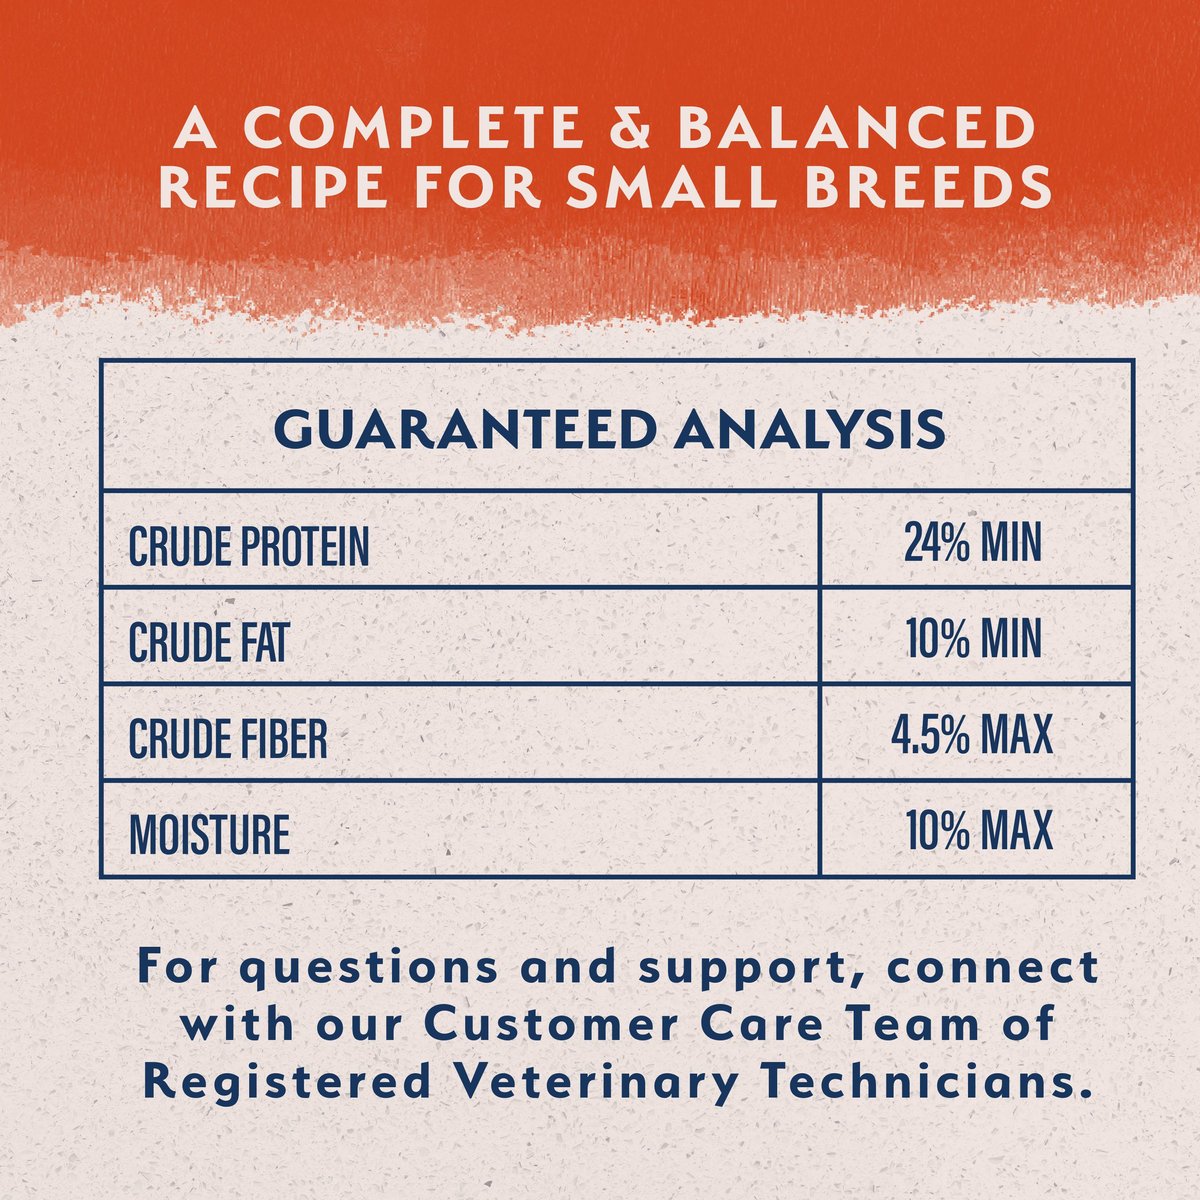 Natural Balance Grain Free Salmon & Sweet Potato Small Breed Dog Food  Dog Food  | PetMax Canada